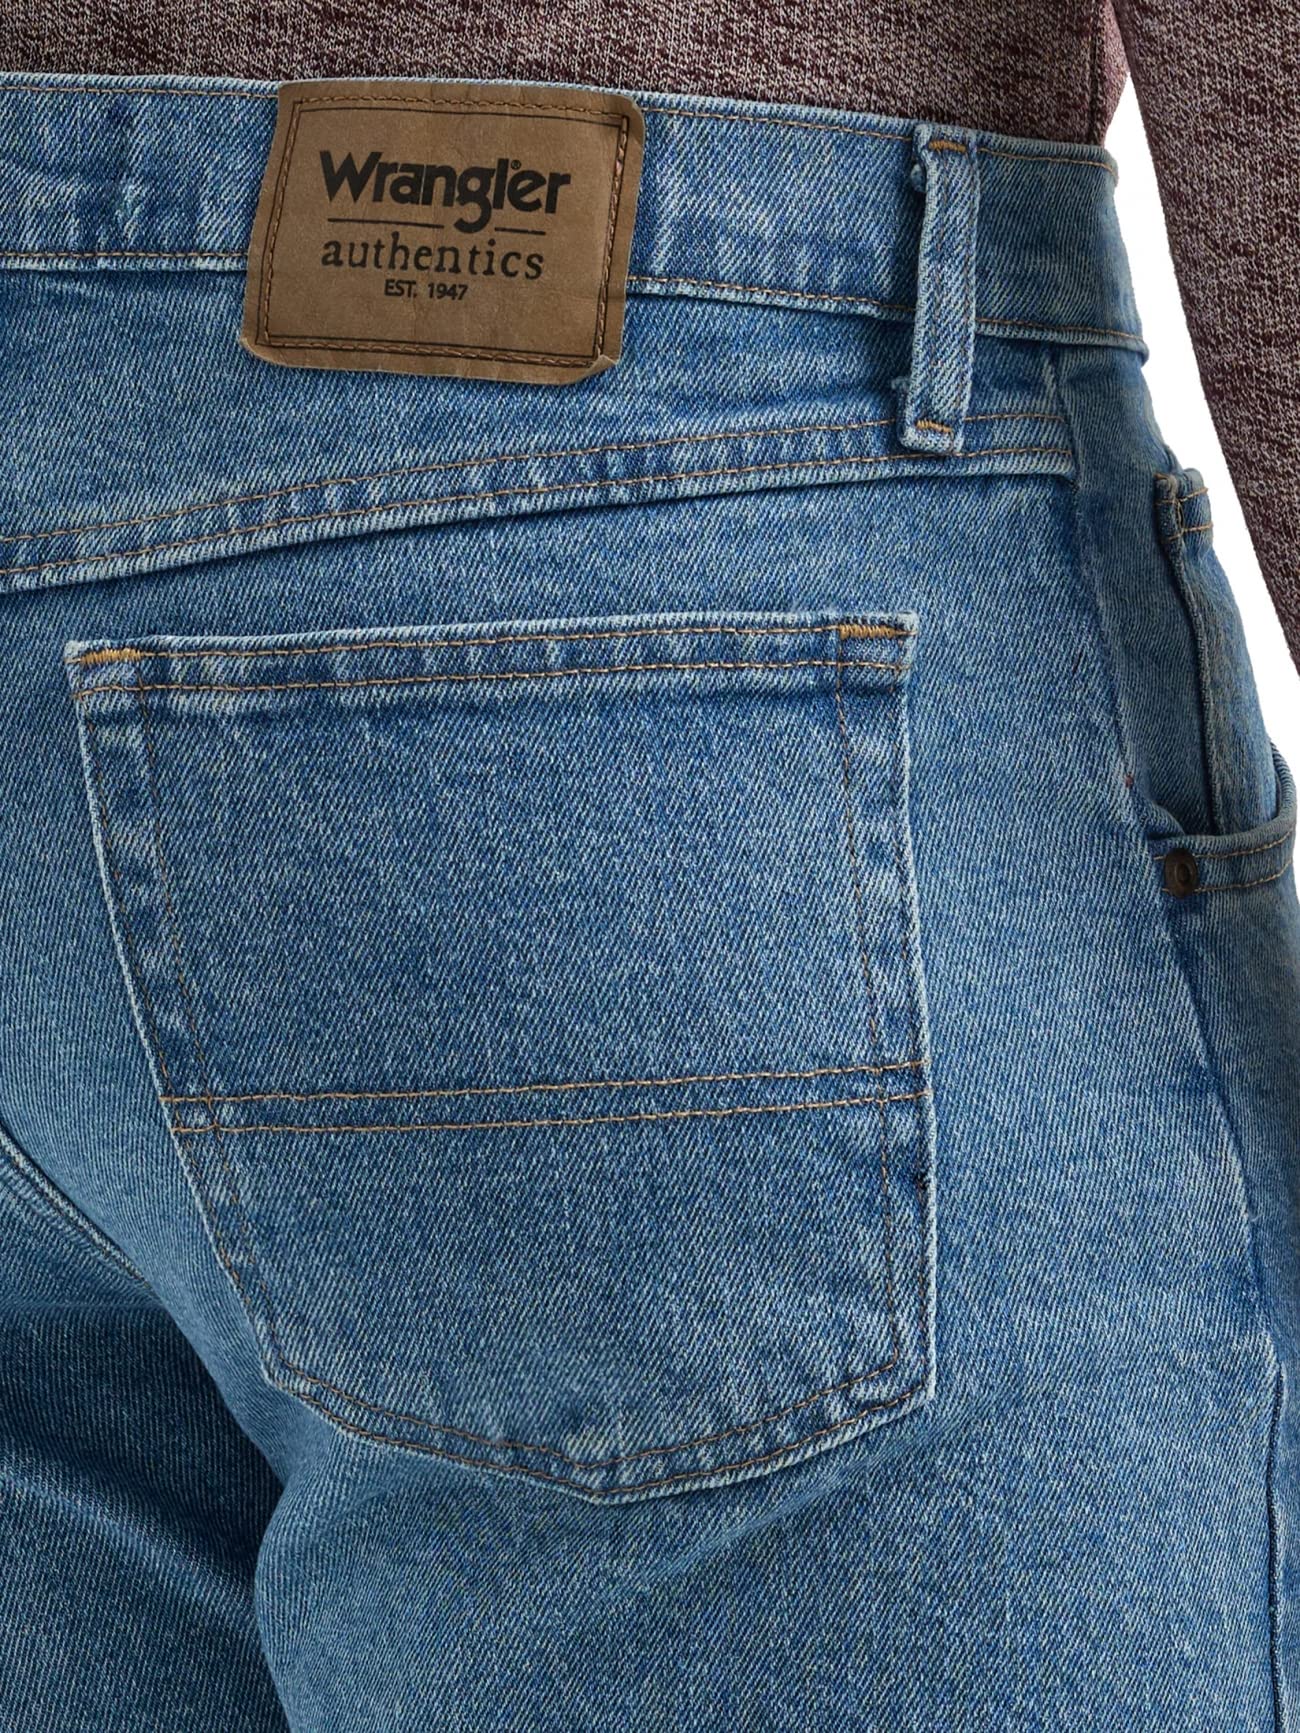 Wrangler Authentics Men's Classic 5-Pocket Regular Fit Jean, Light Stonewash Flex, 40W X 32L